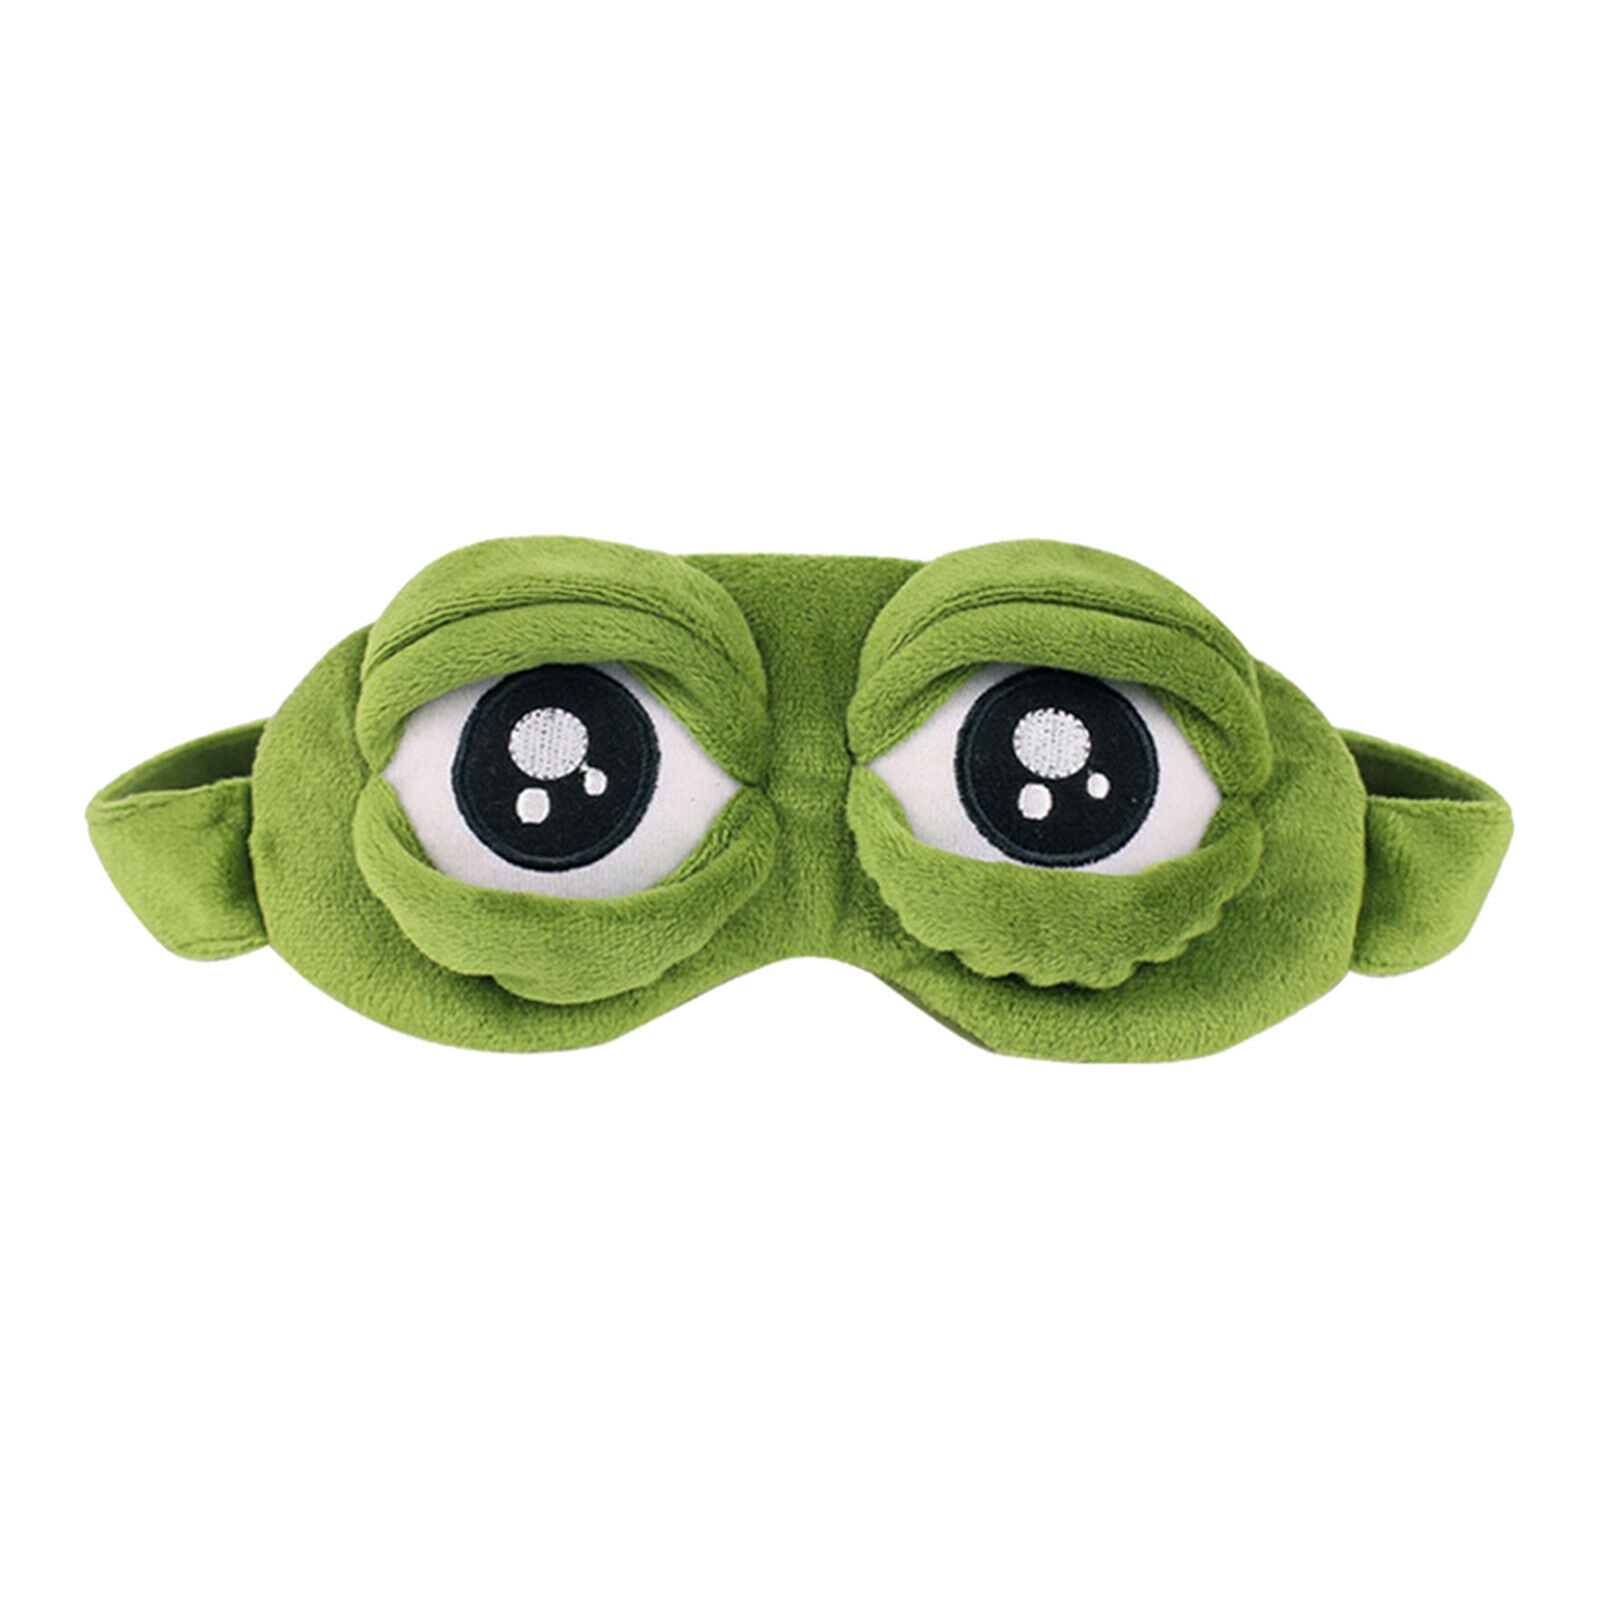 2X Frog Blindfold Sleep Masks Blackout Women's Cotton Breathable Eye Vacation